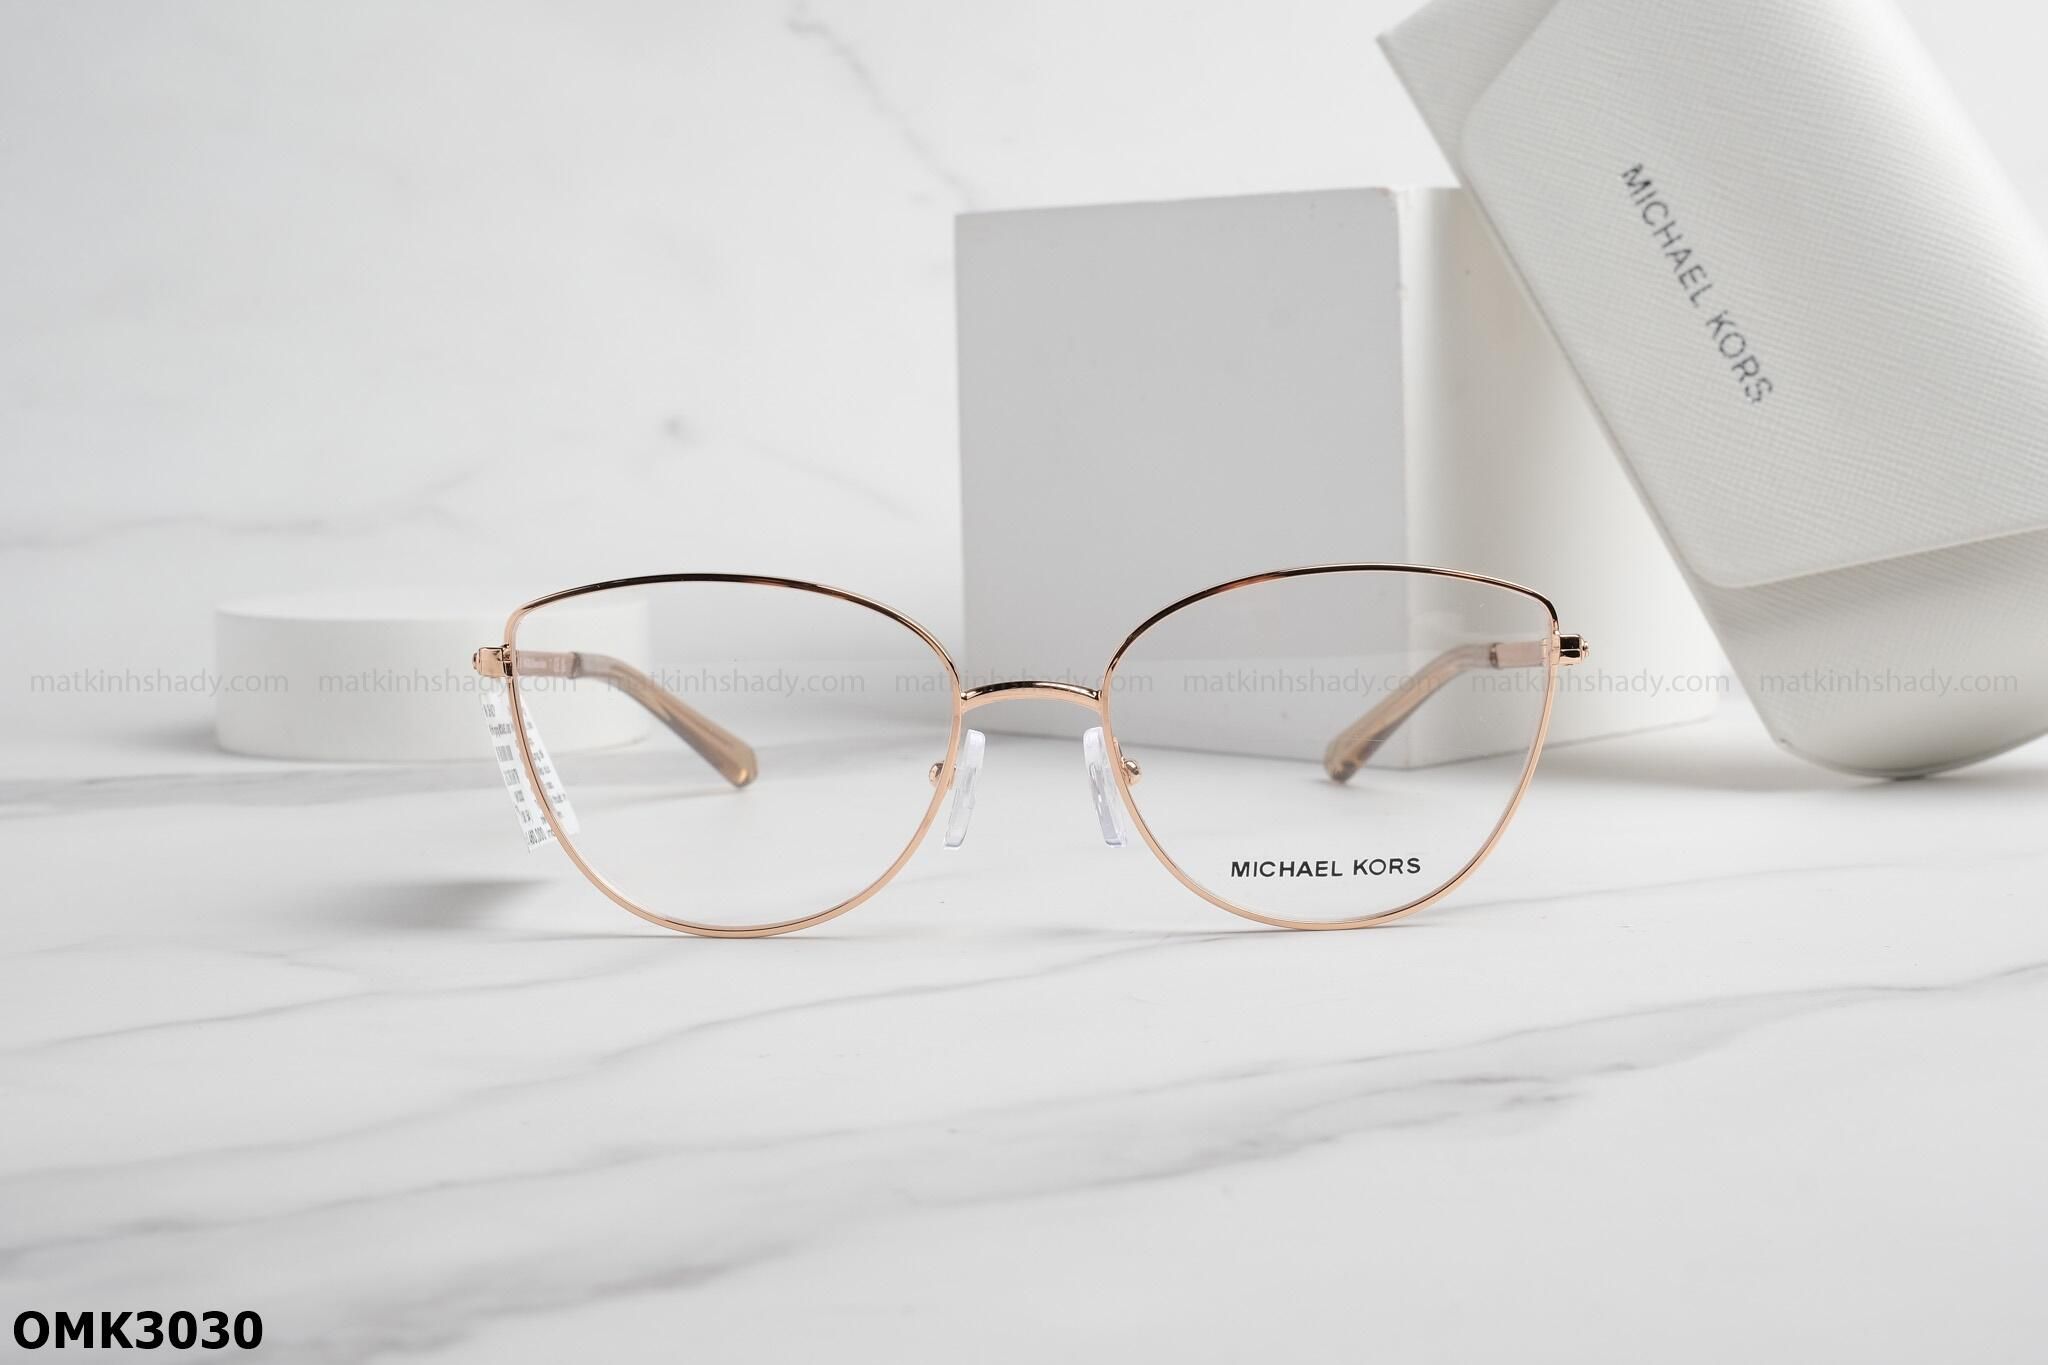  Michael Kors Eyewear - Glasses - OMK3030 